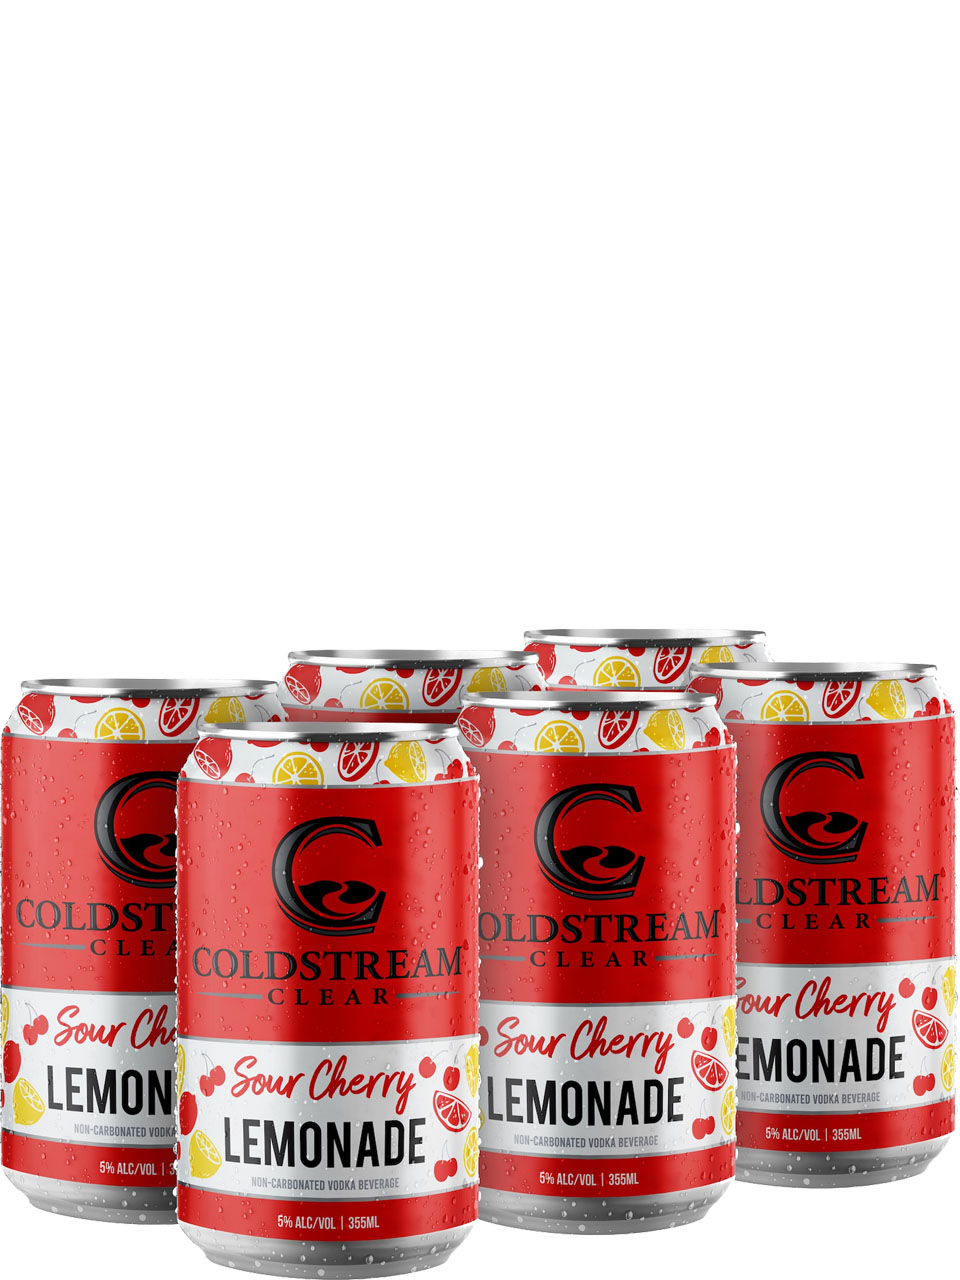 Coldstream Sour Cherry Lemonade 6 Pack Cans